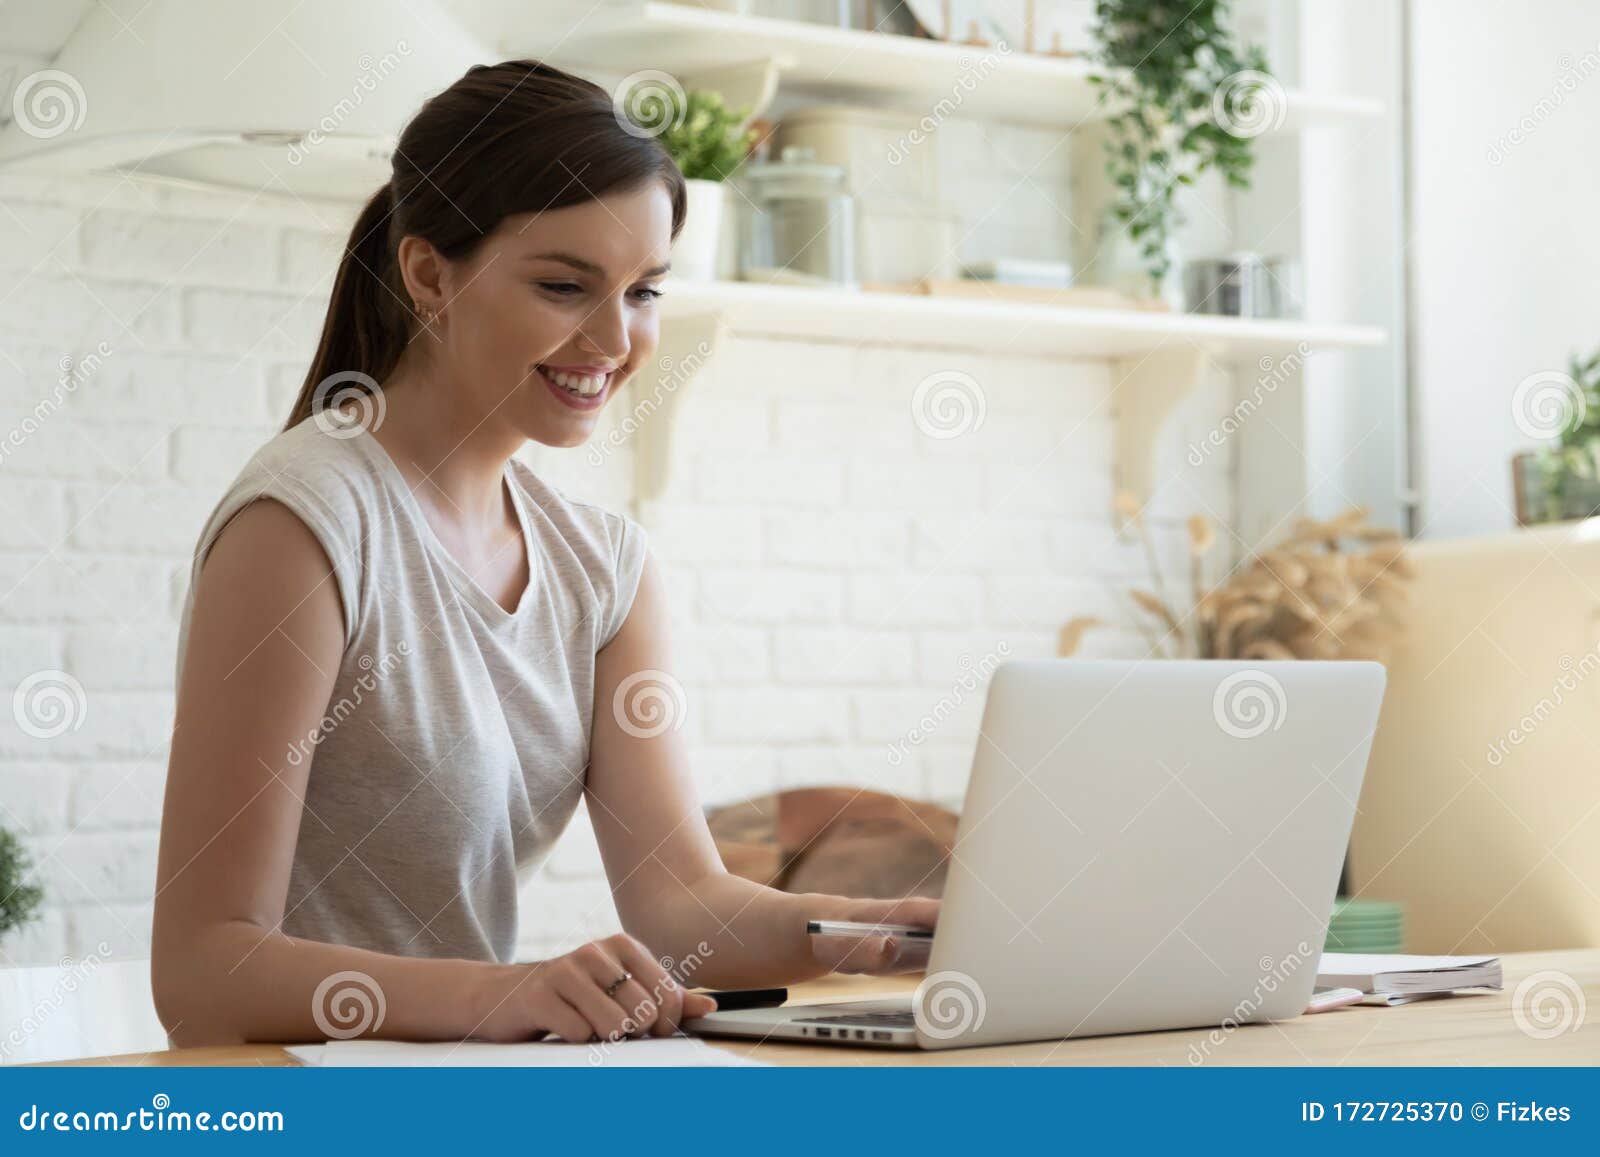 smiling millennial girl watch webinar on laptop